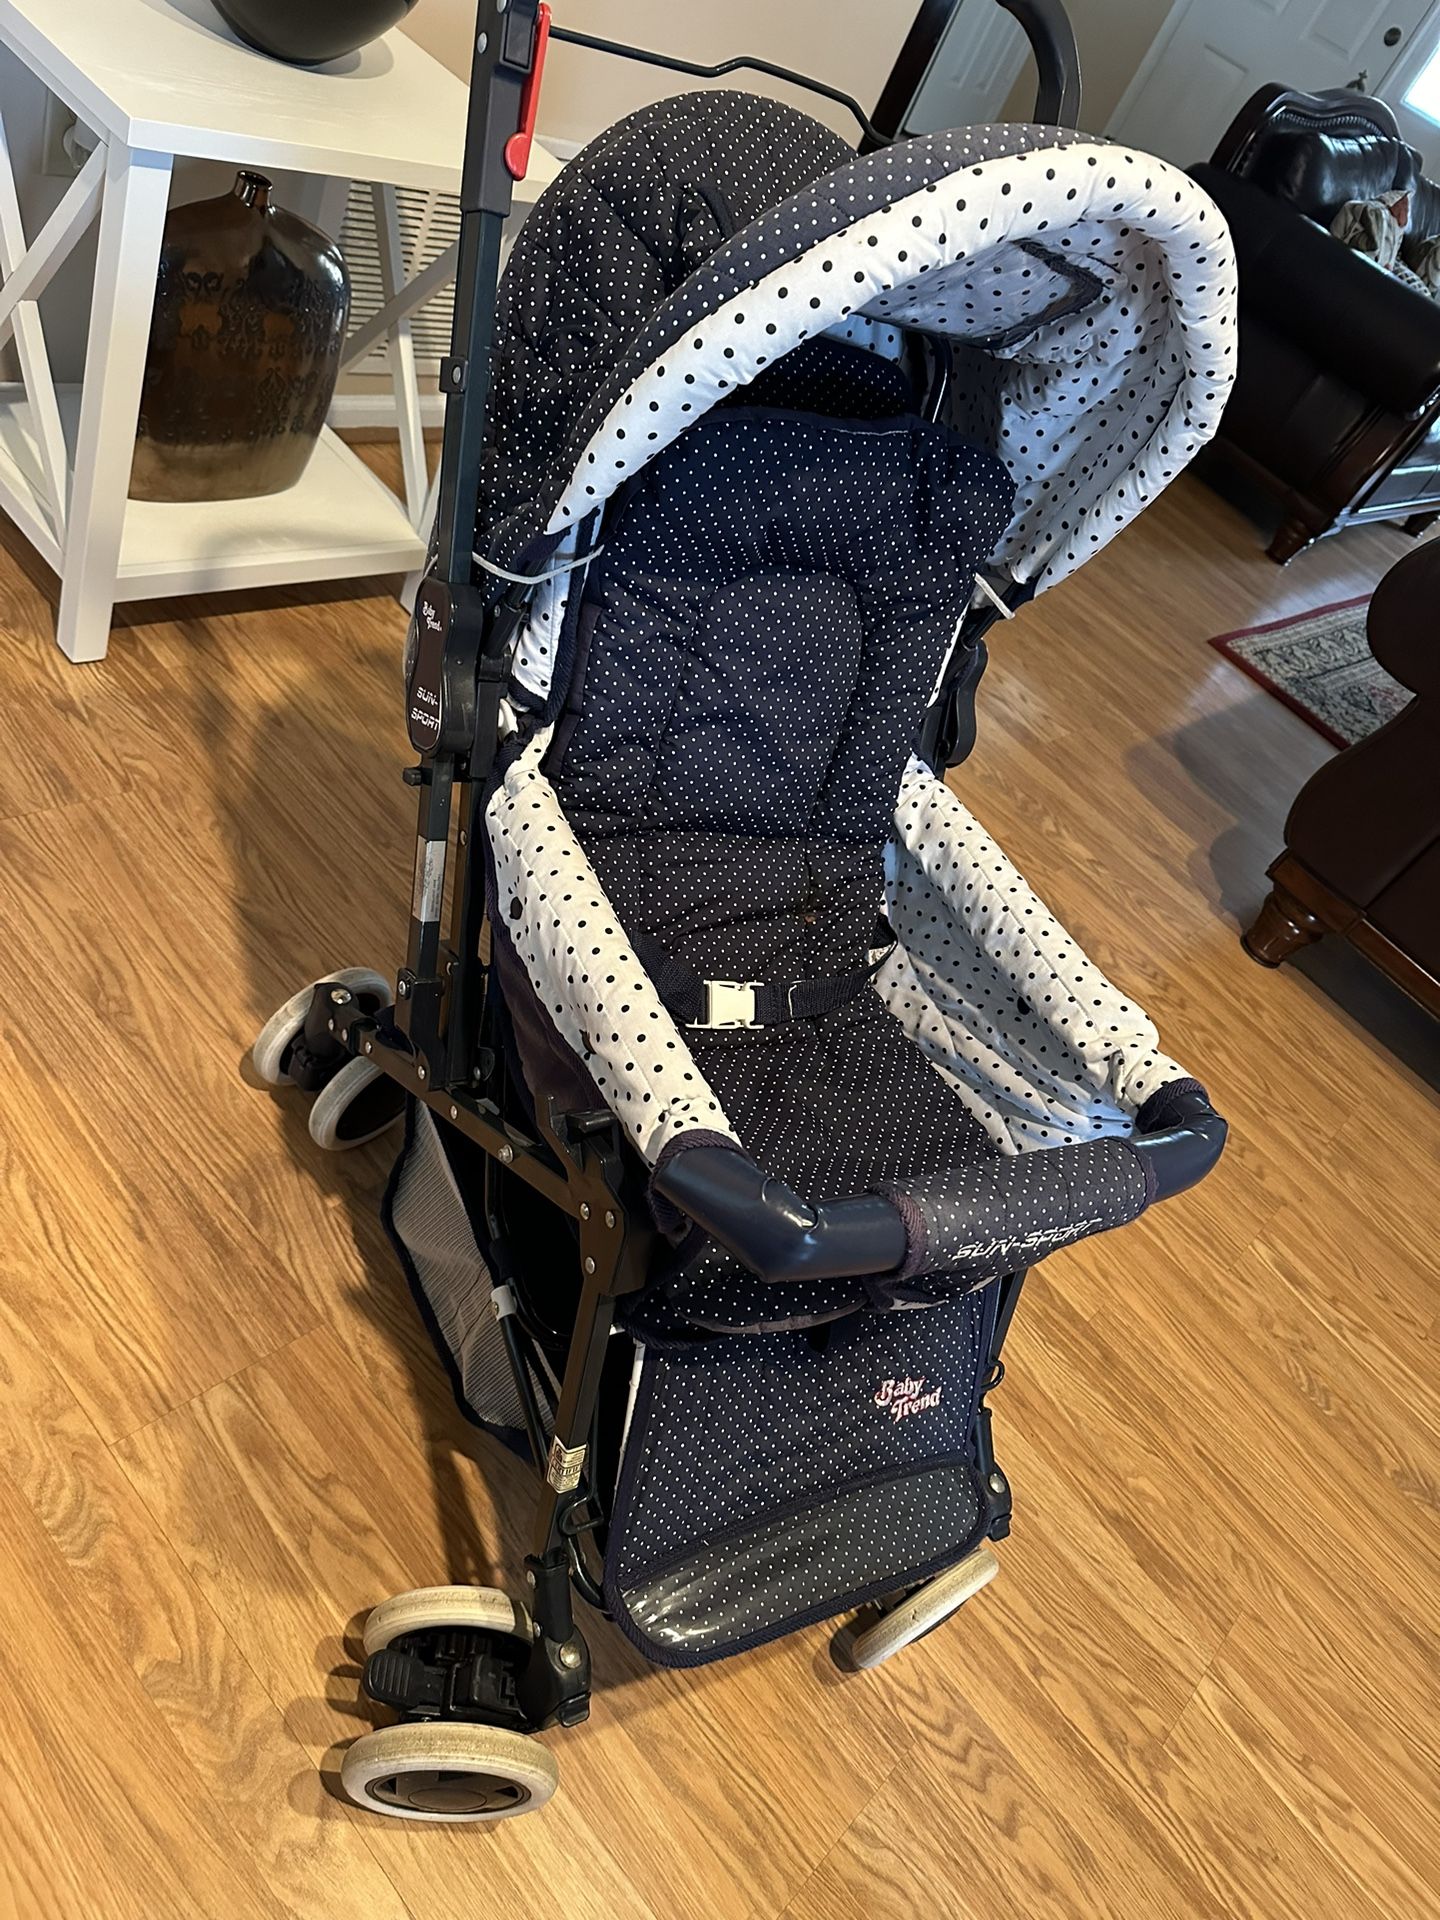 Baby Trend Folding stroller Sun sport easier folding and carry for traveling